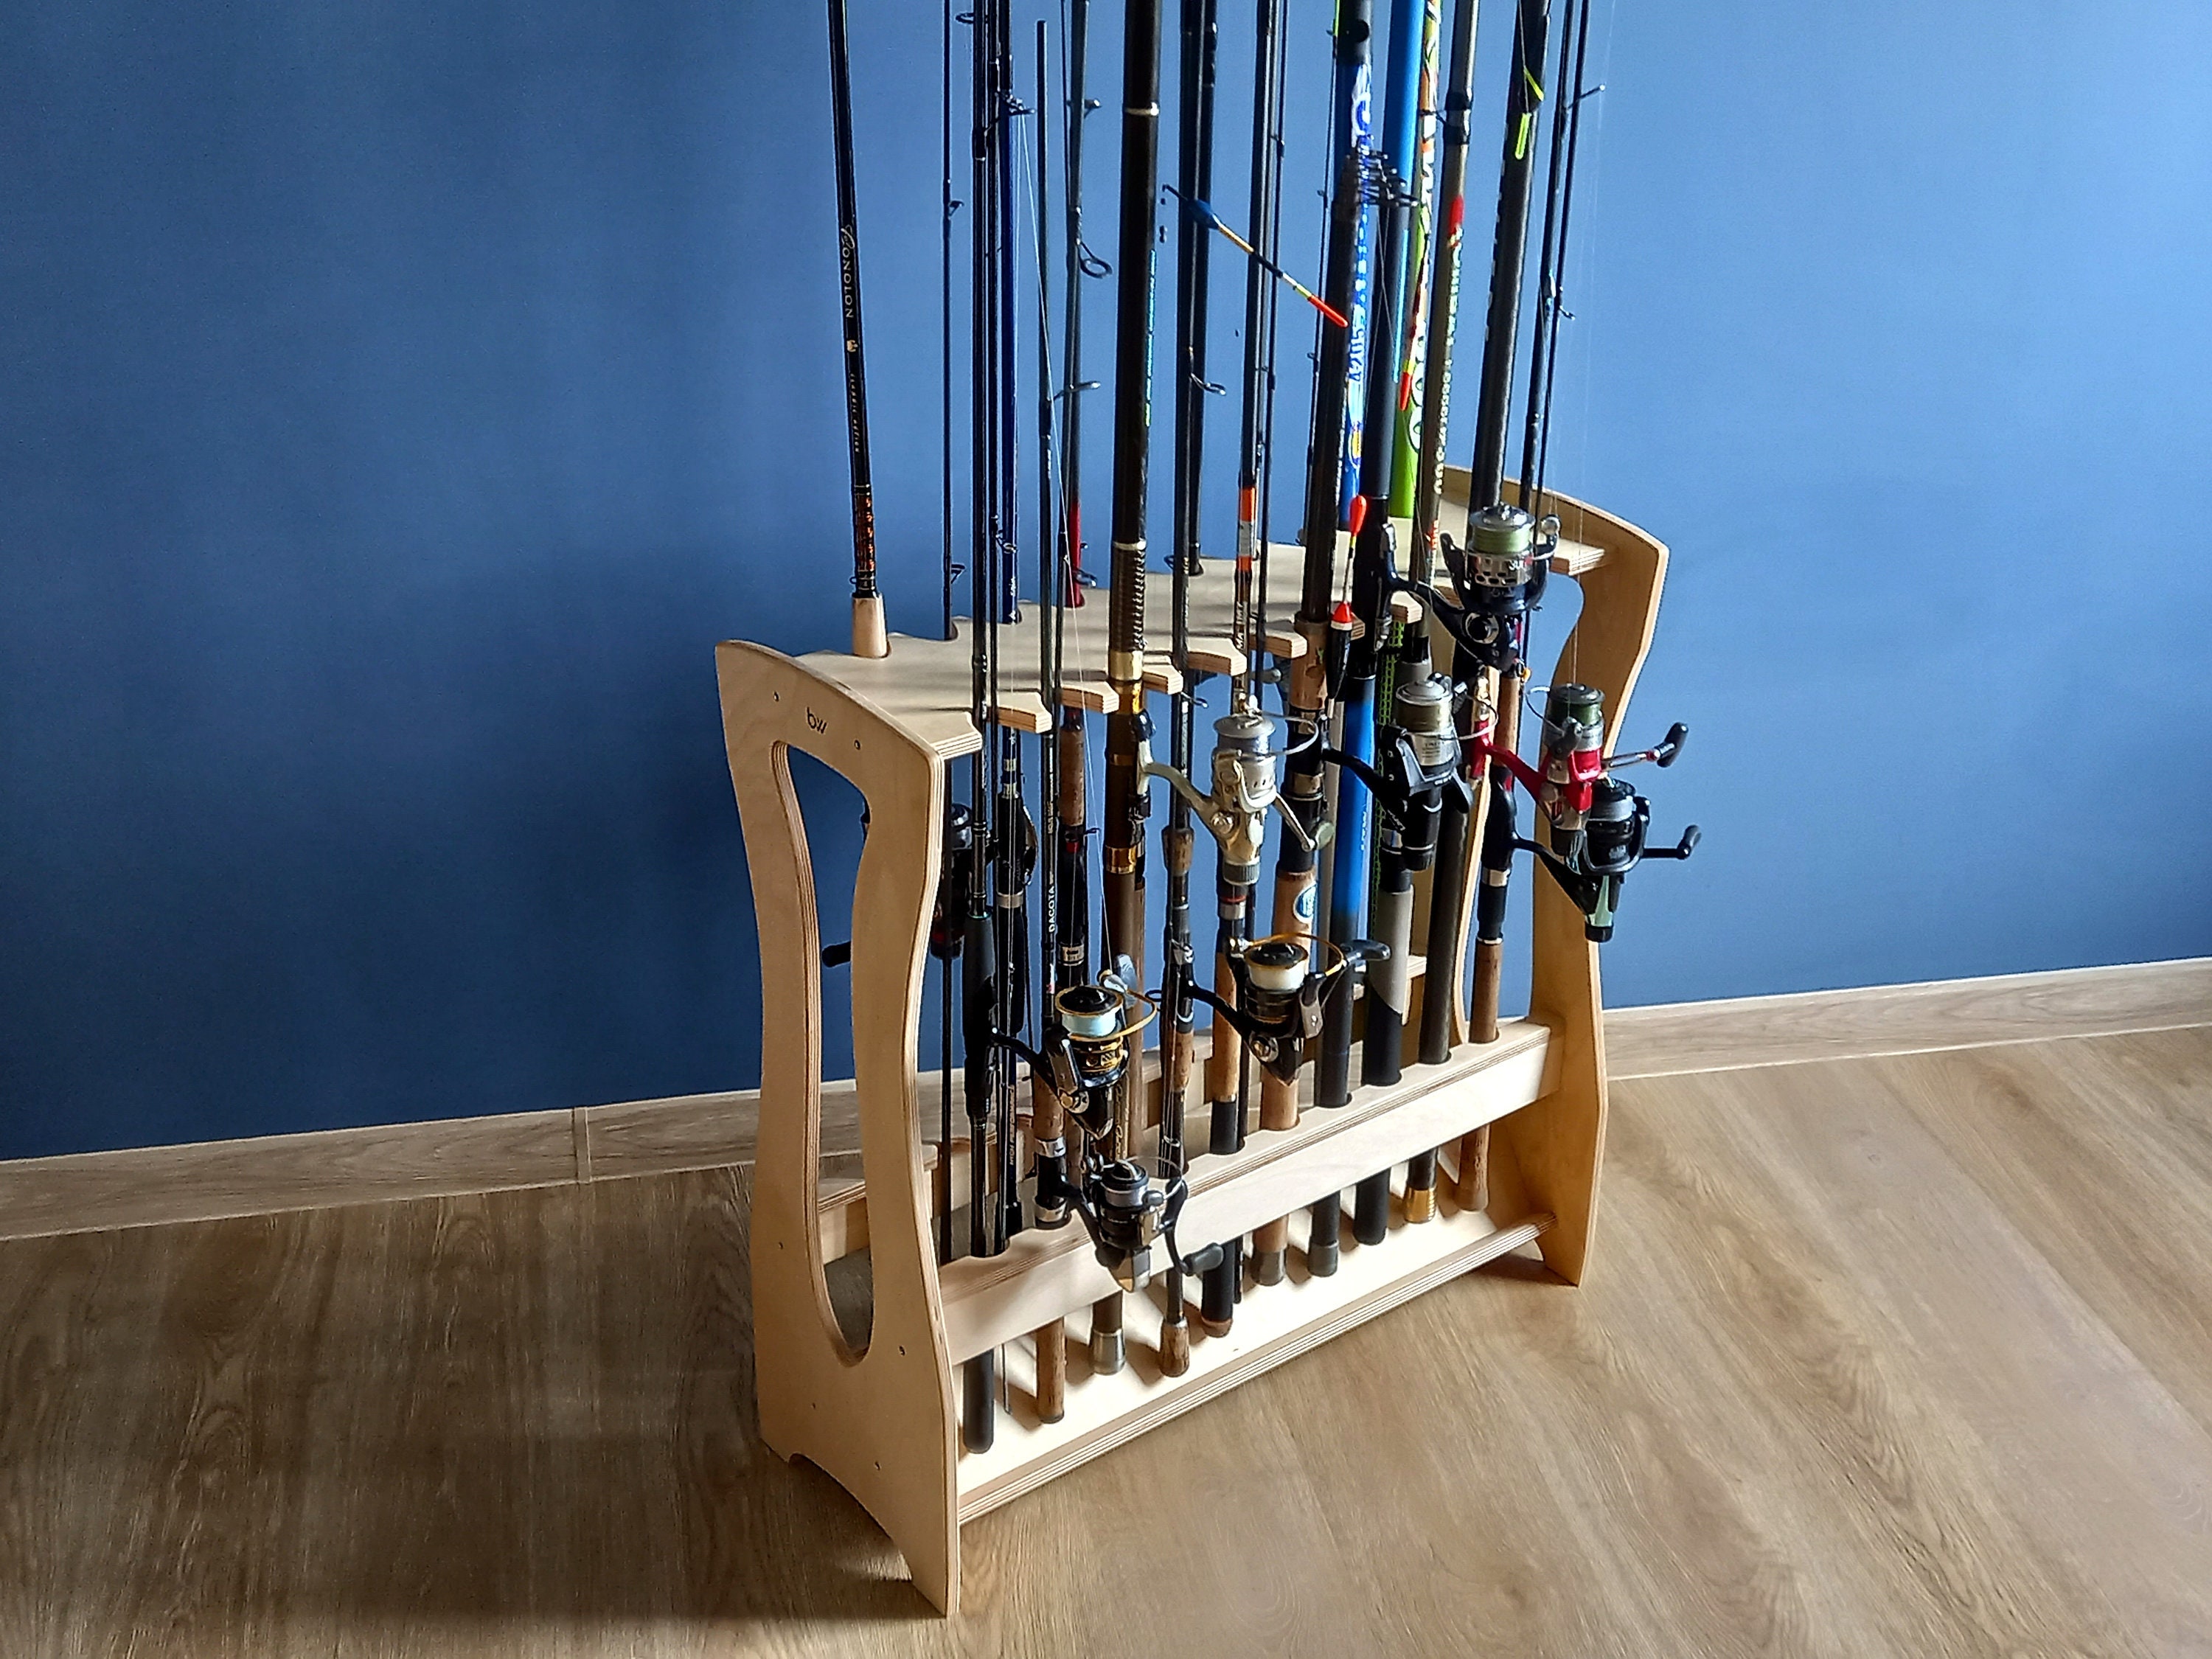 Fishing pole holder / Fishing rod rack / Standing organizer for 20 rods